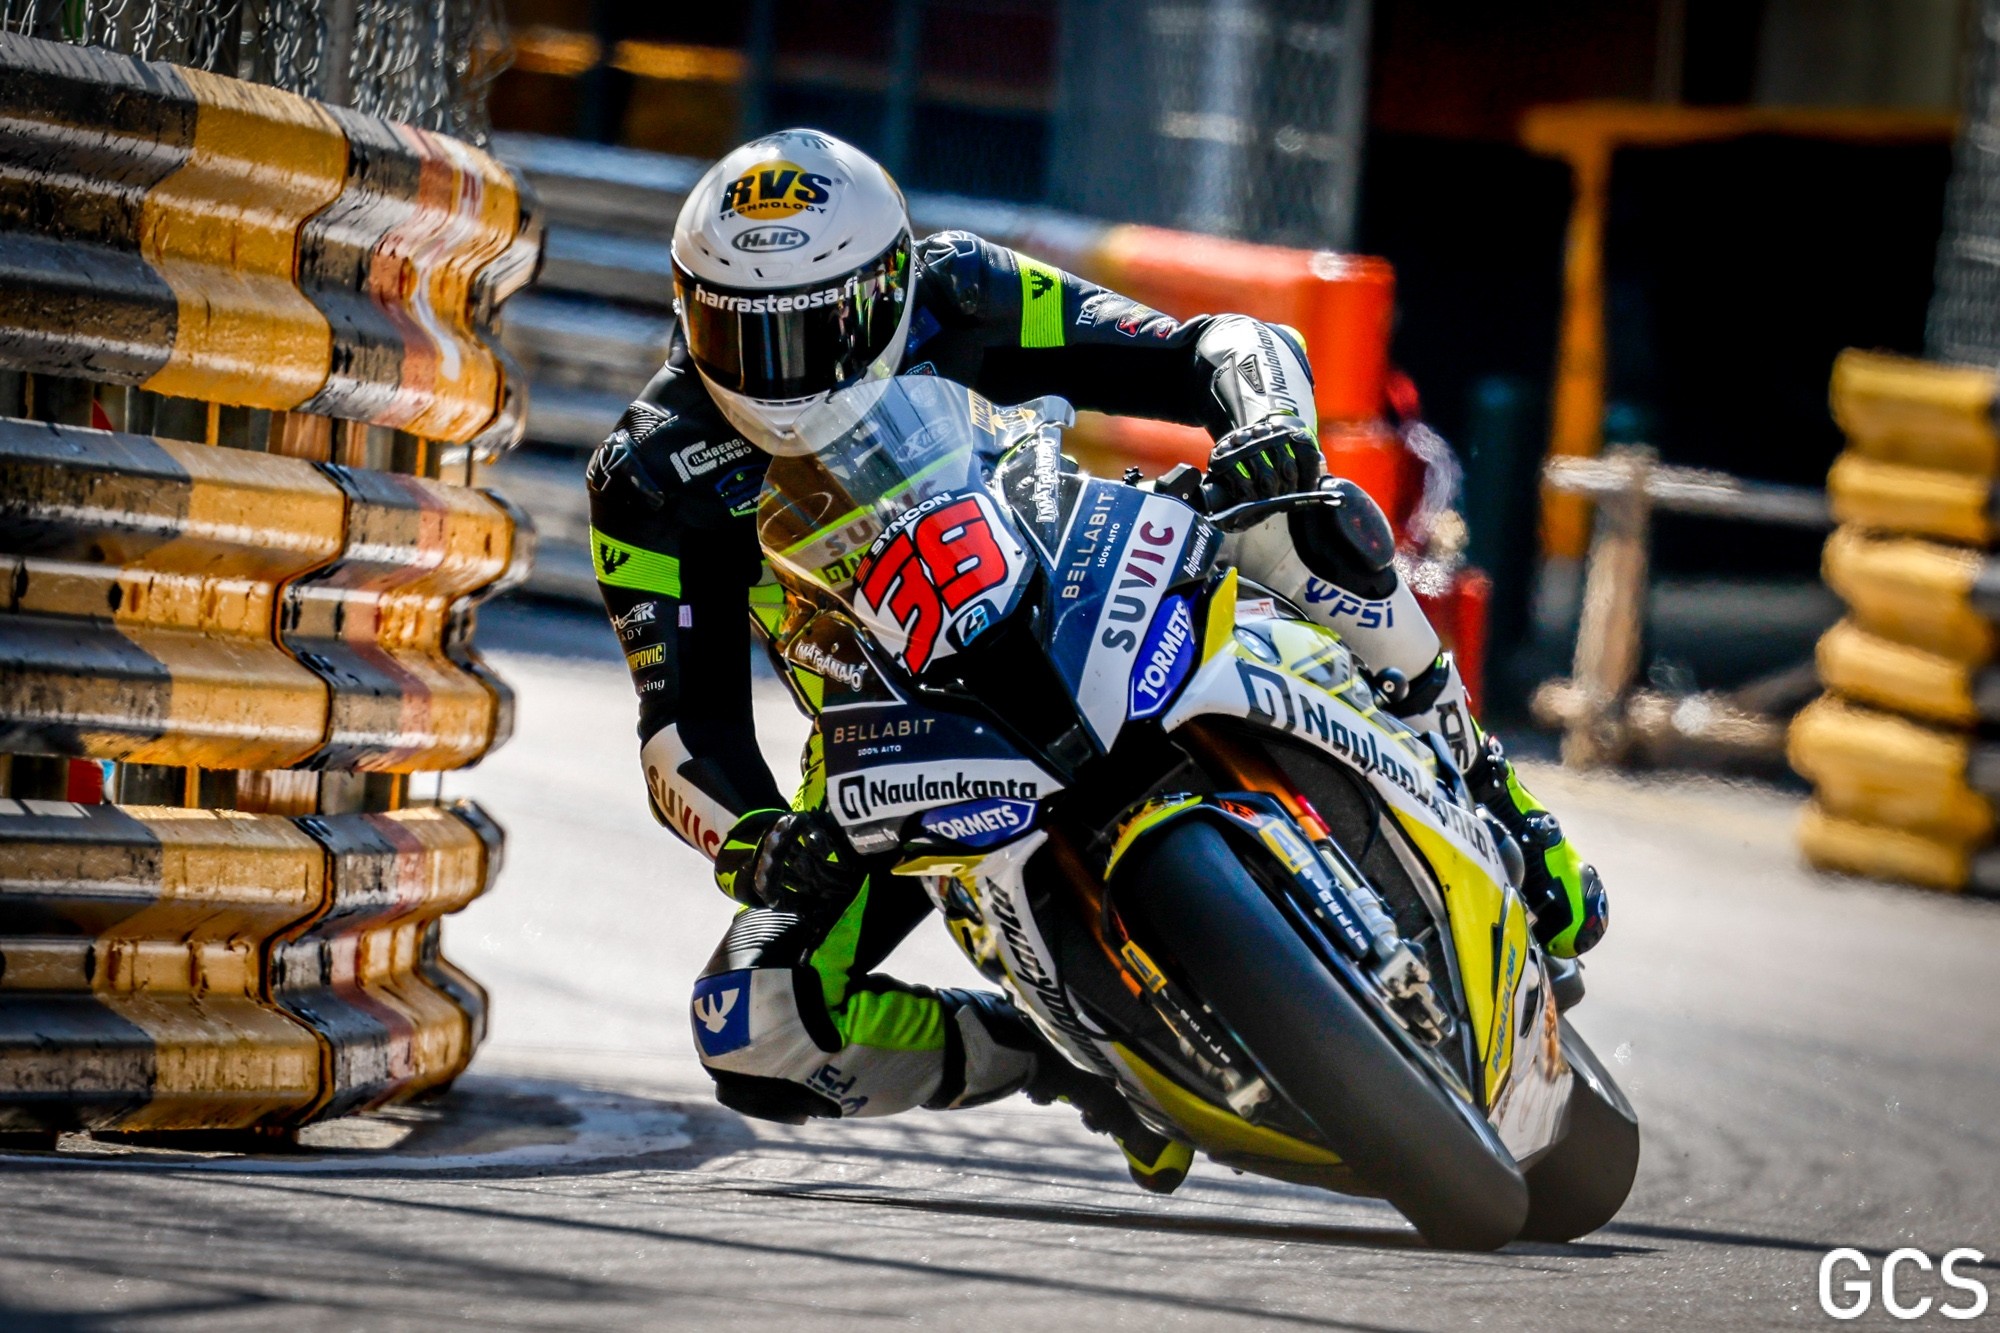 55th Macau Motorcycle GP: Practice/Qualifying/Race Schedule